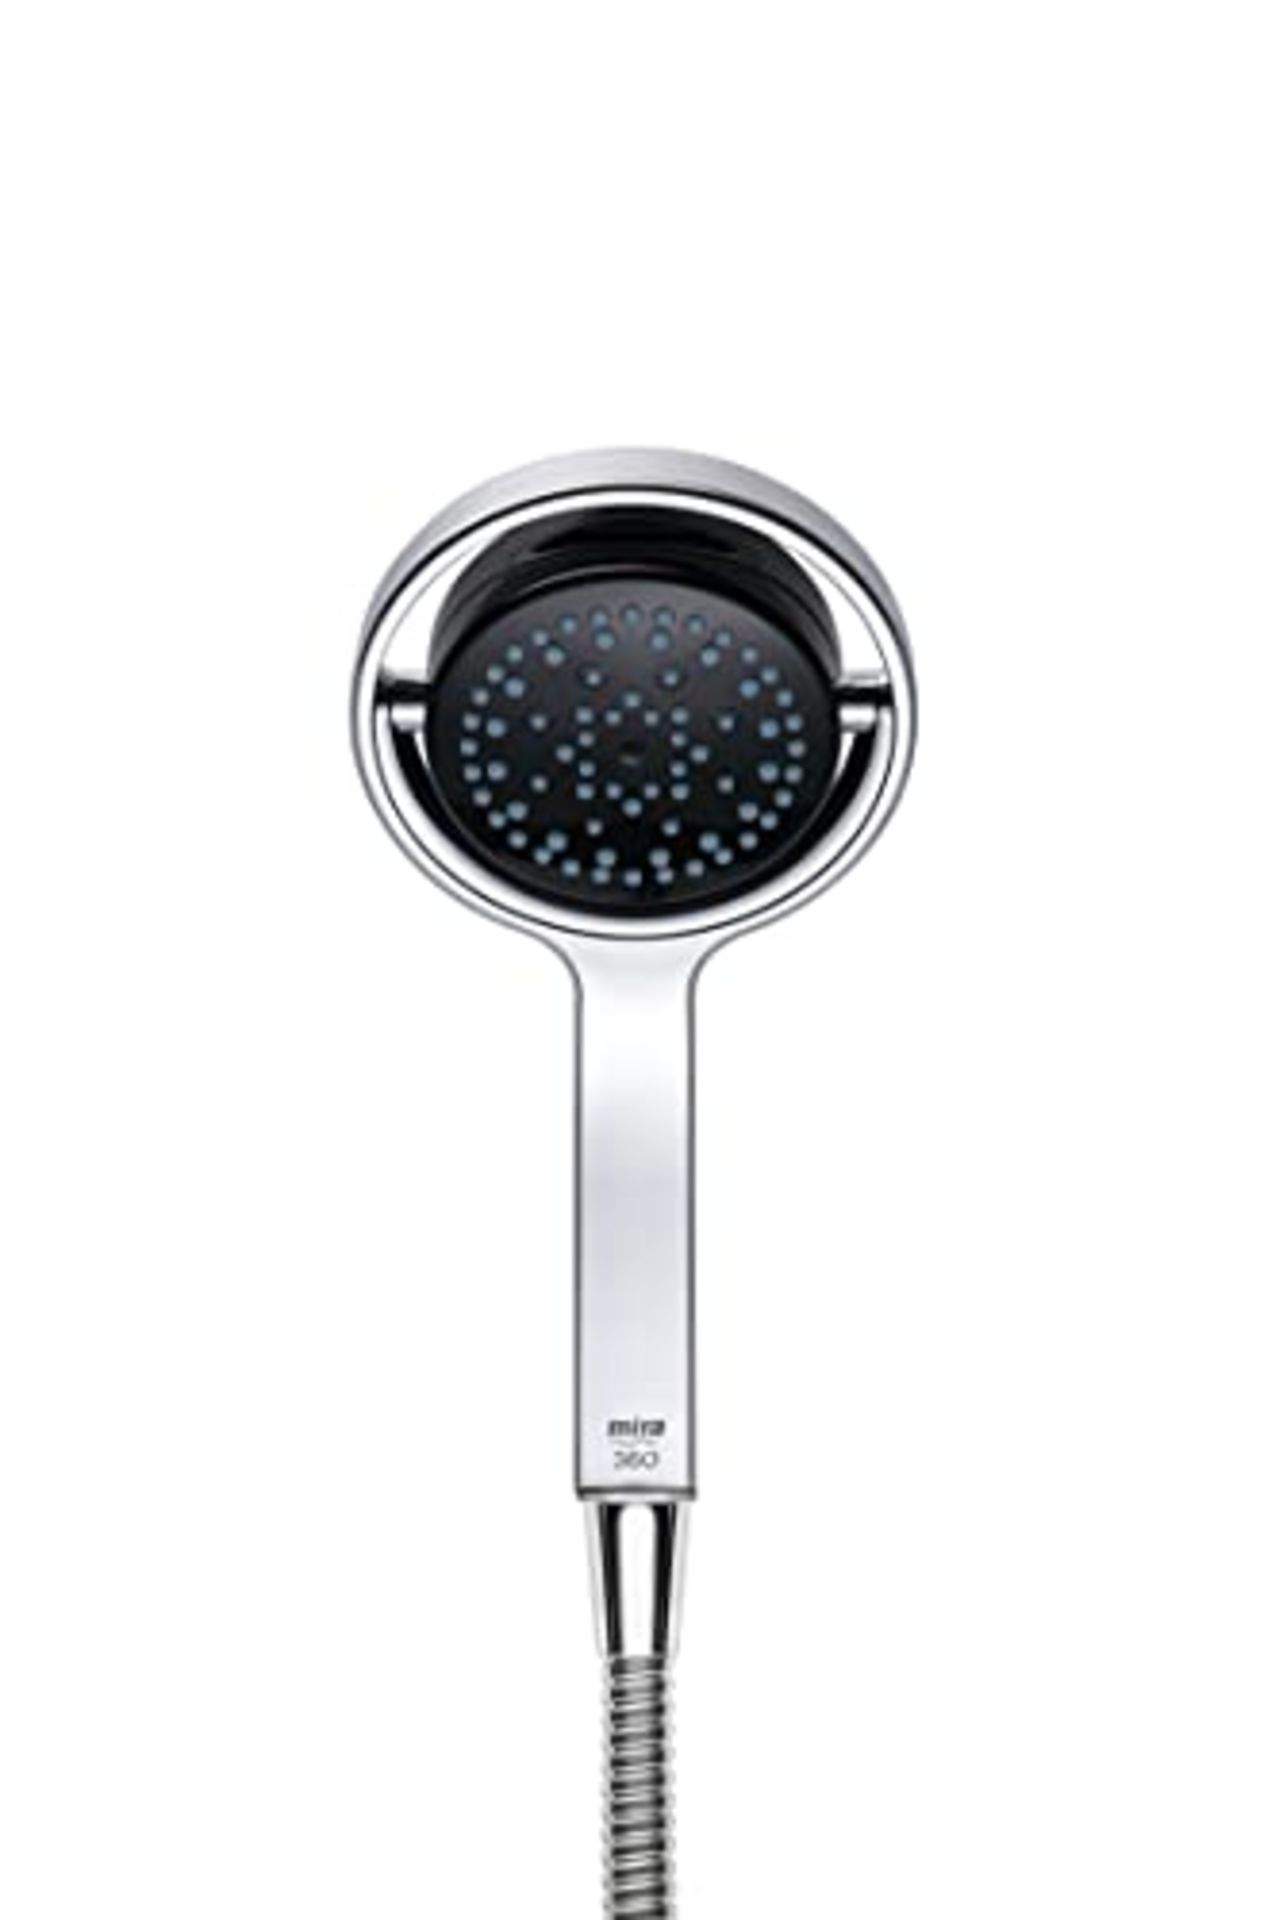 RRP £55.00 Mira Showers 360 Shower Head Handheld Shower Head 4 Spray Shower Head Black/Chrome 2.1